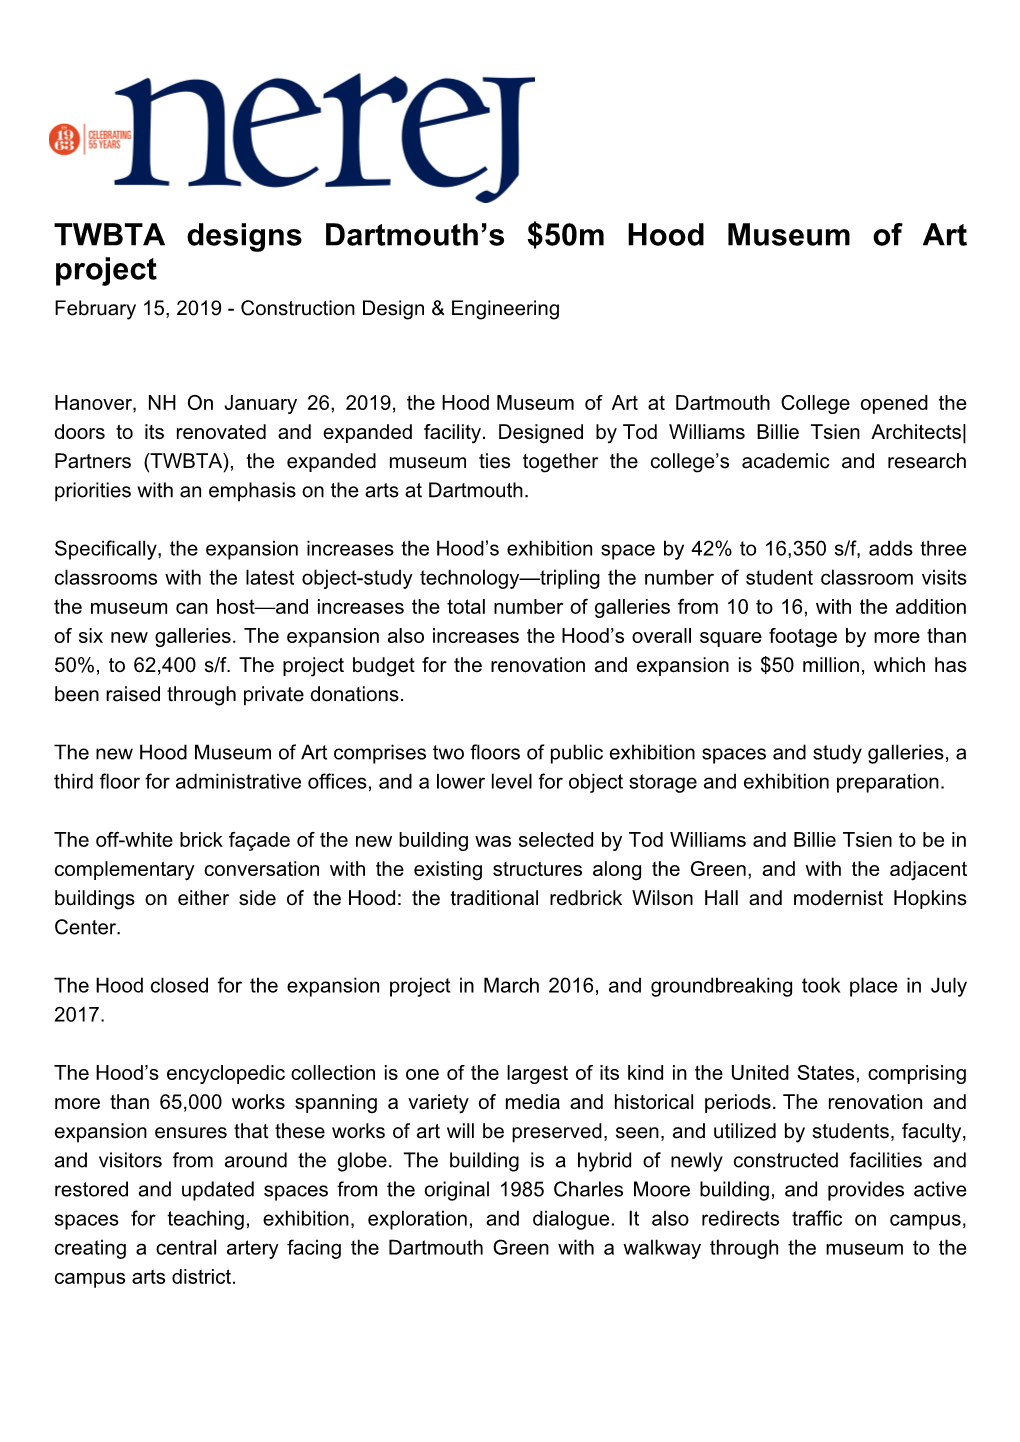 TWBTA Designs Dartmouth S $50M Hood Museum of Art Project